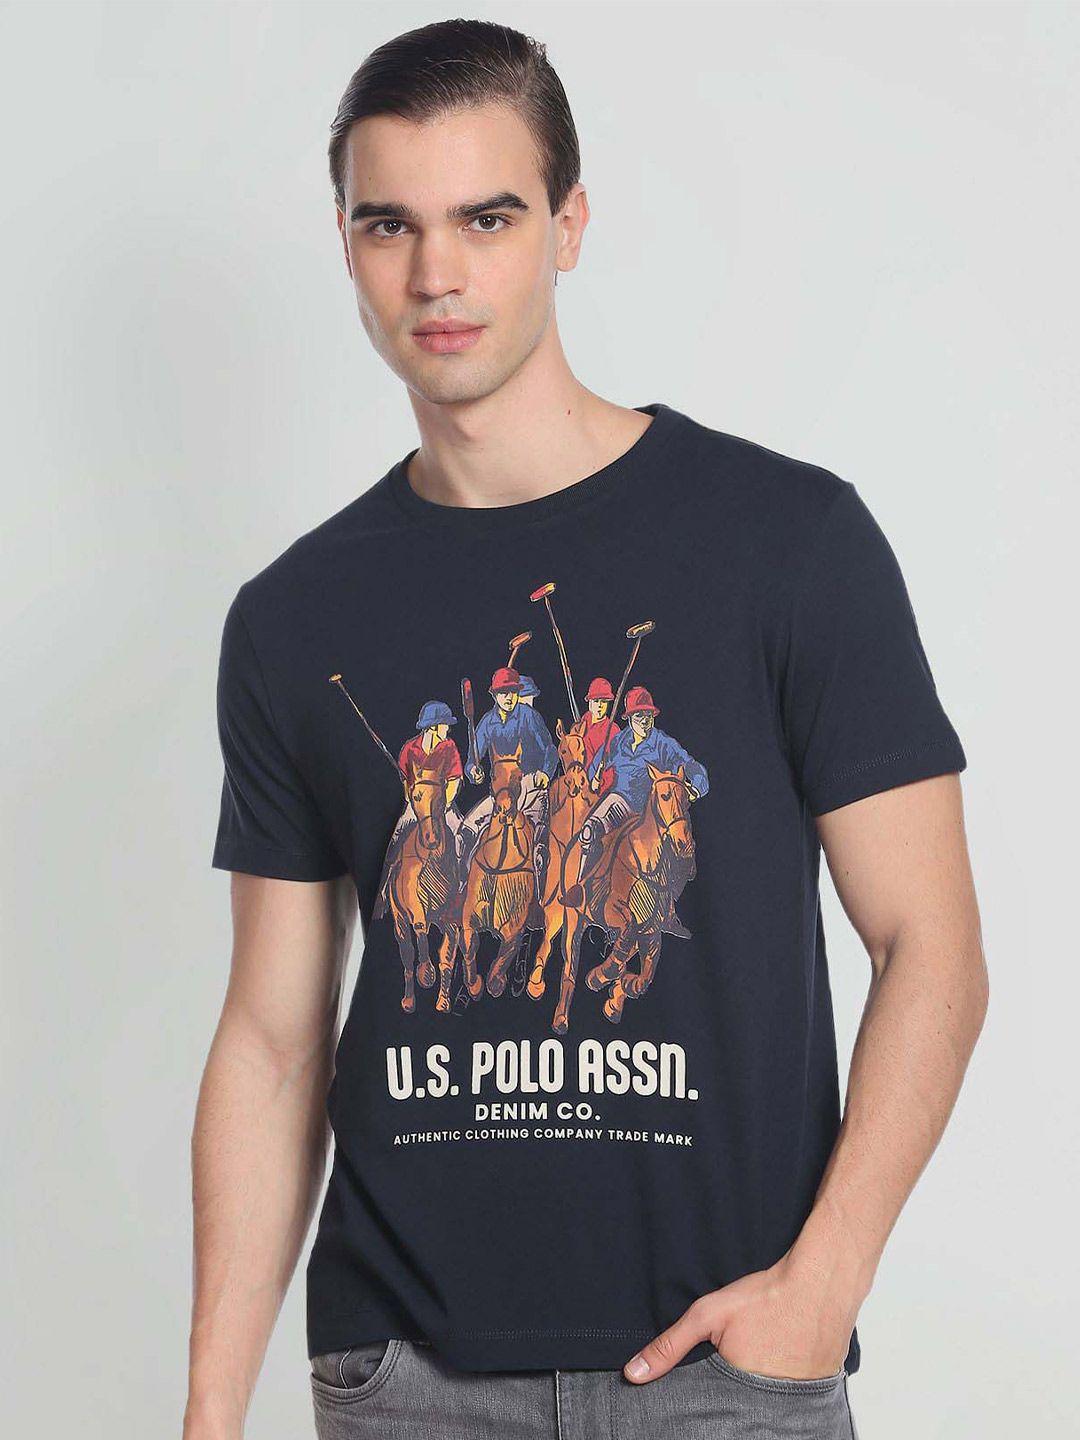 u.s. polo assn. denim co. brand print cotton t-shirt